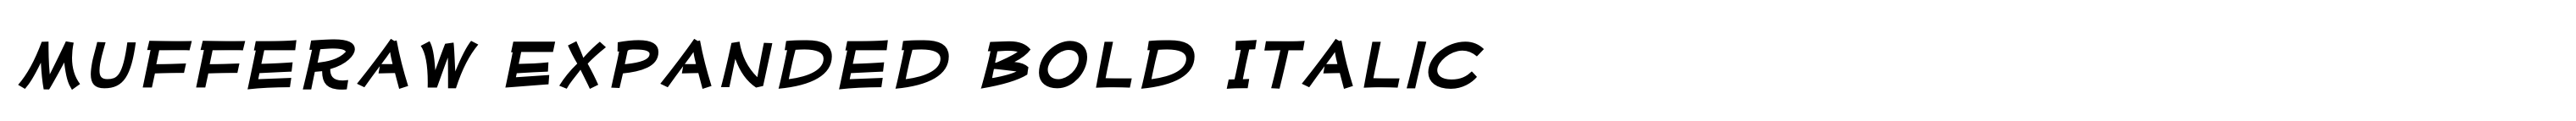 Mufferaw Expanded Bold Italic